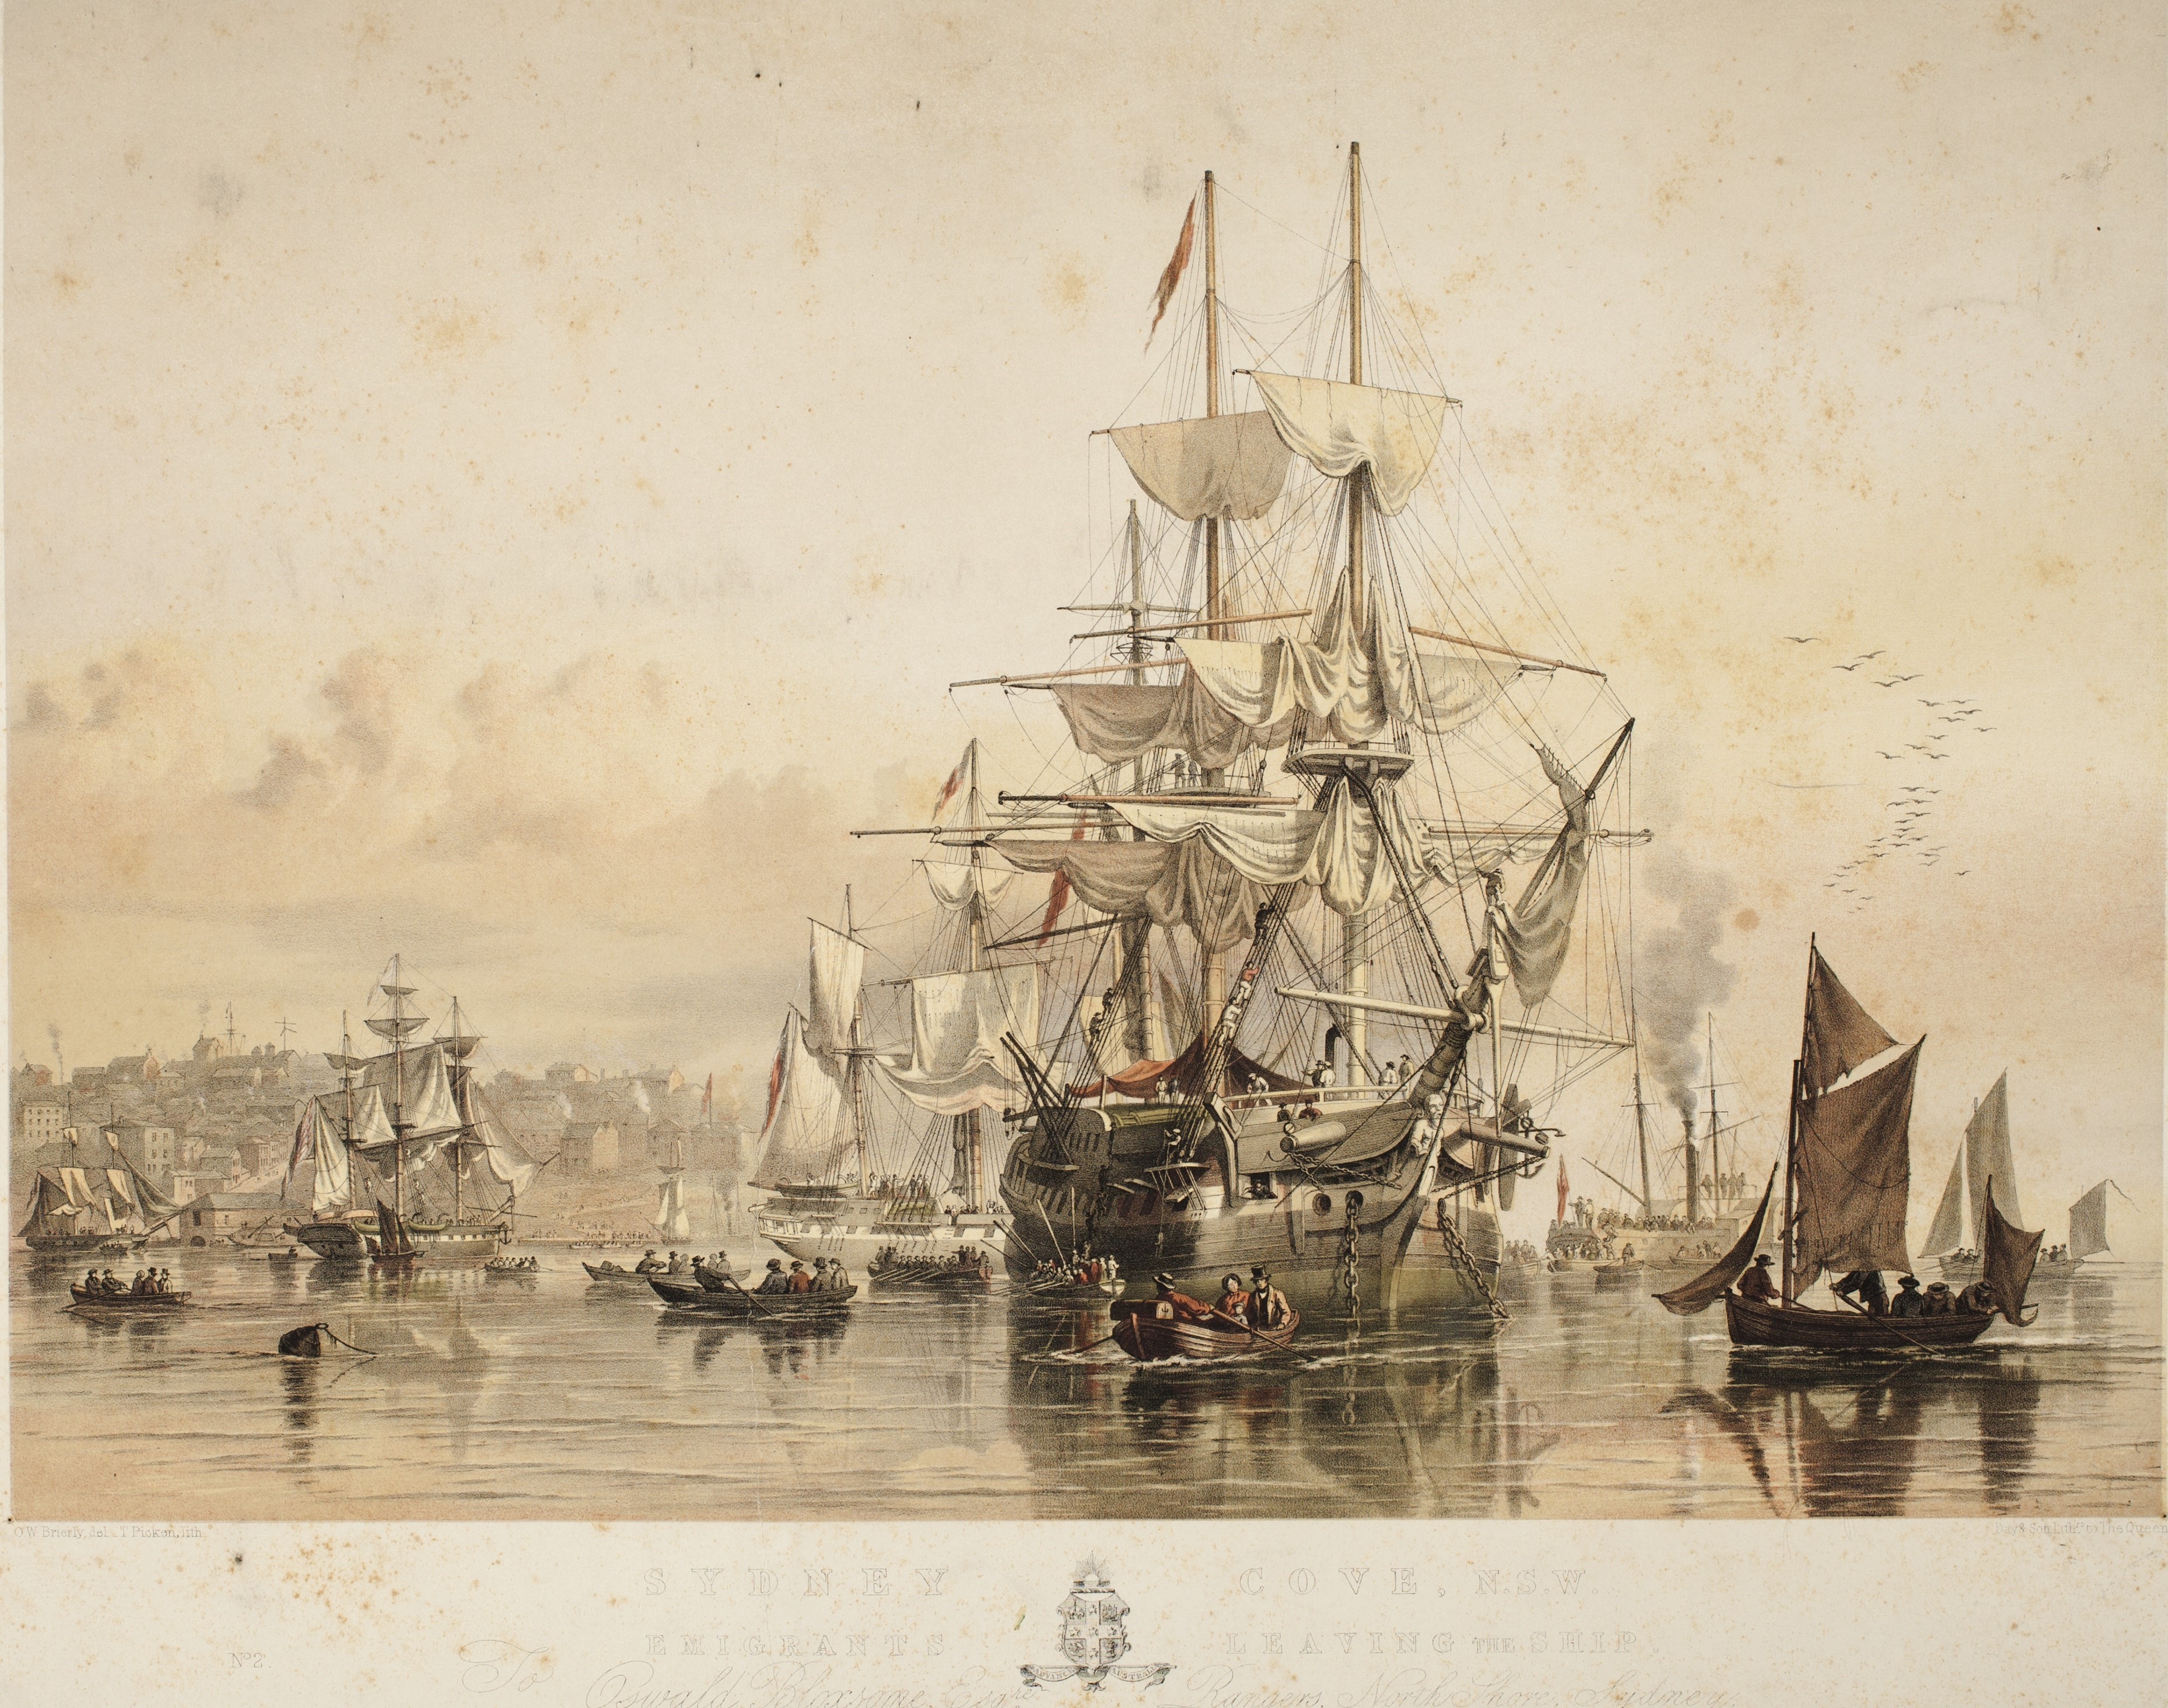 Illustration of emigrants leaving their ship